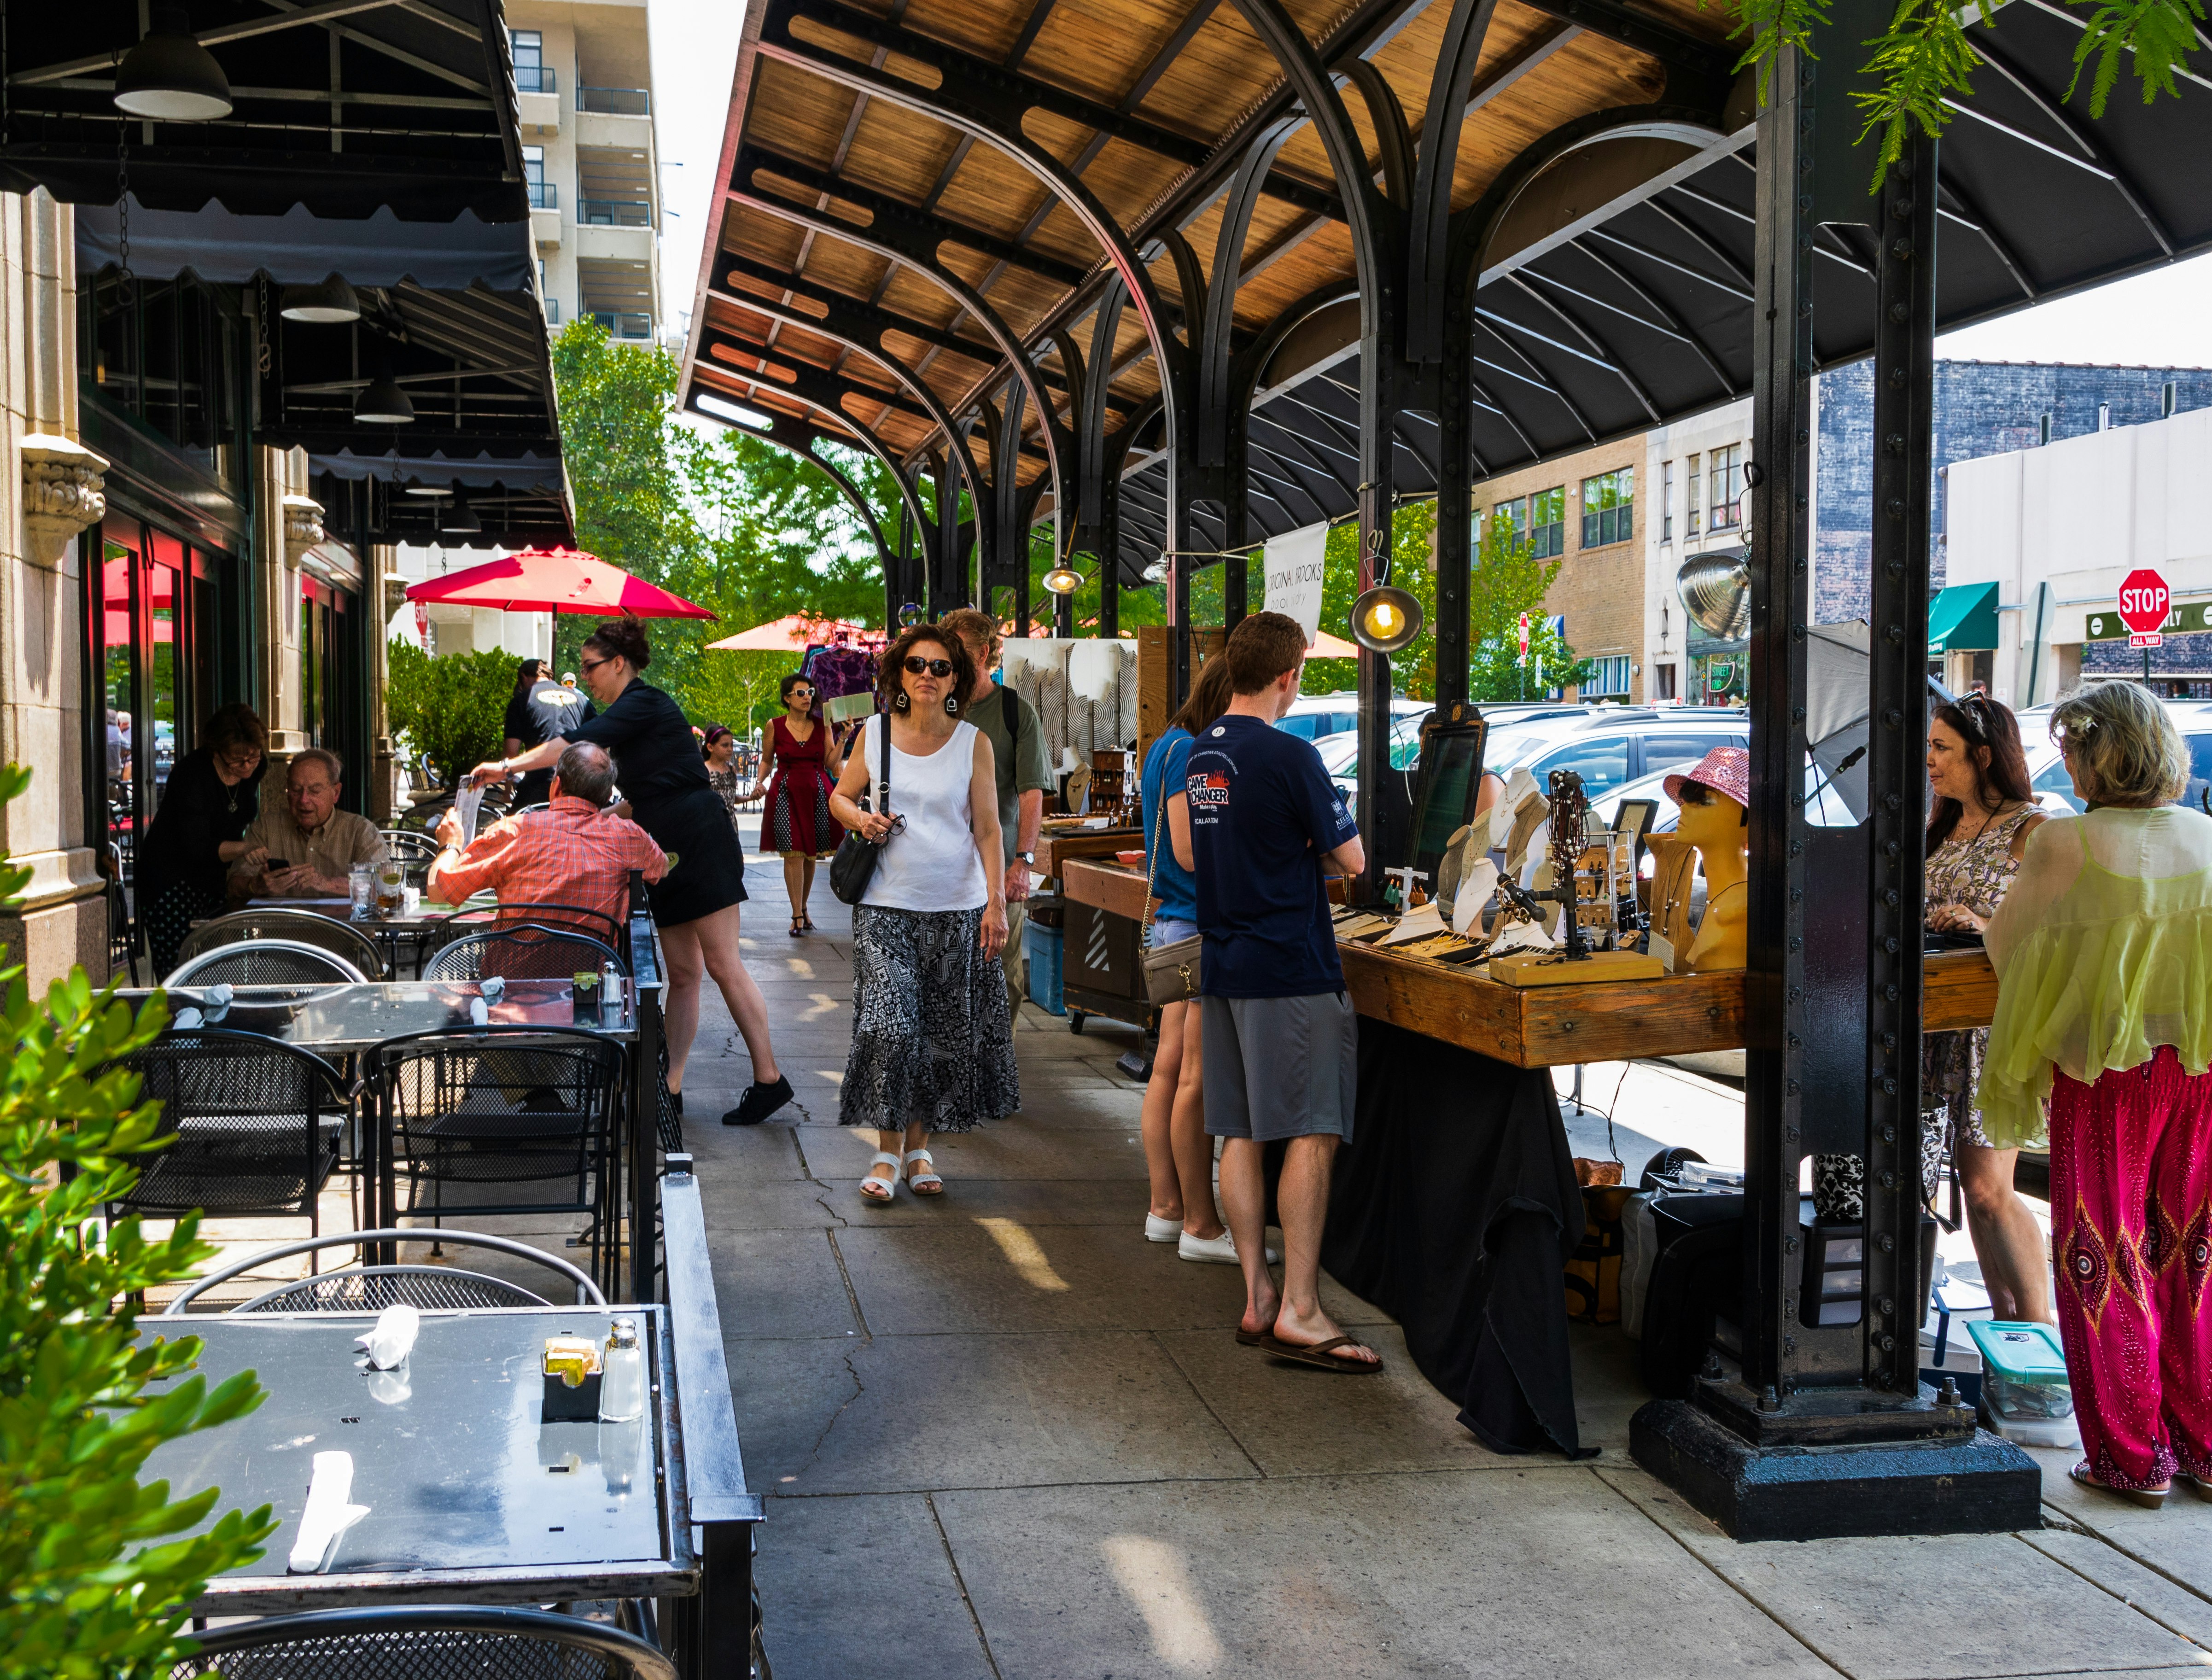 Streetside market stalls near a dining area on Grove Arcade